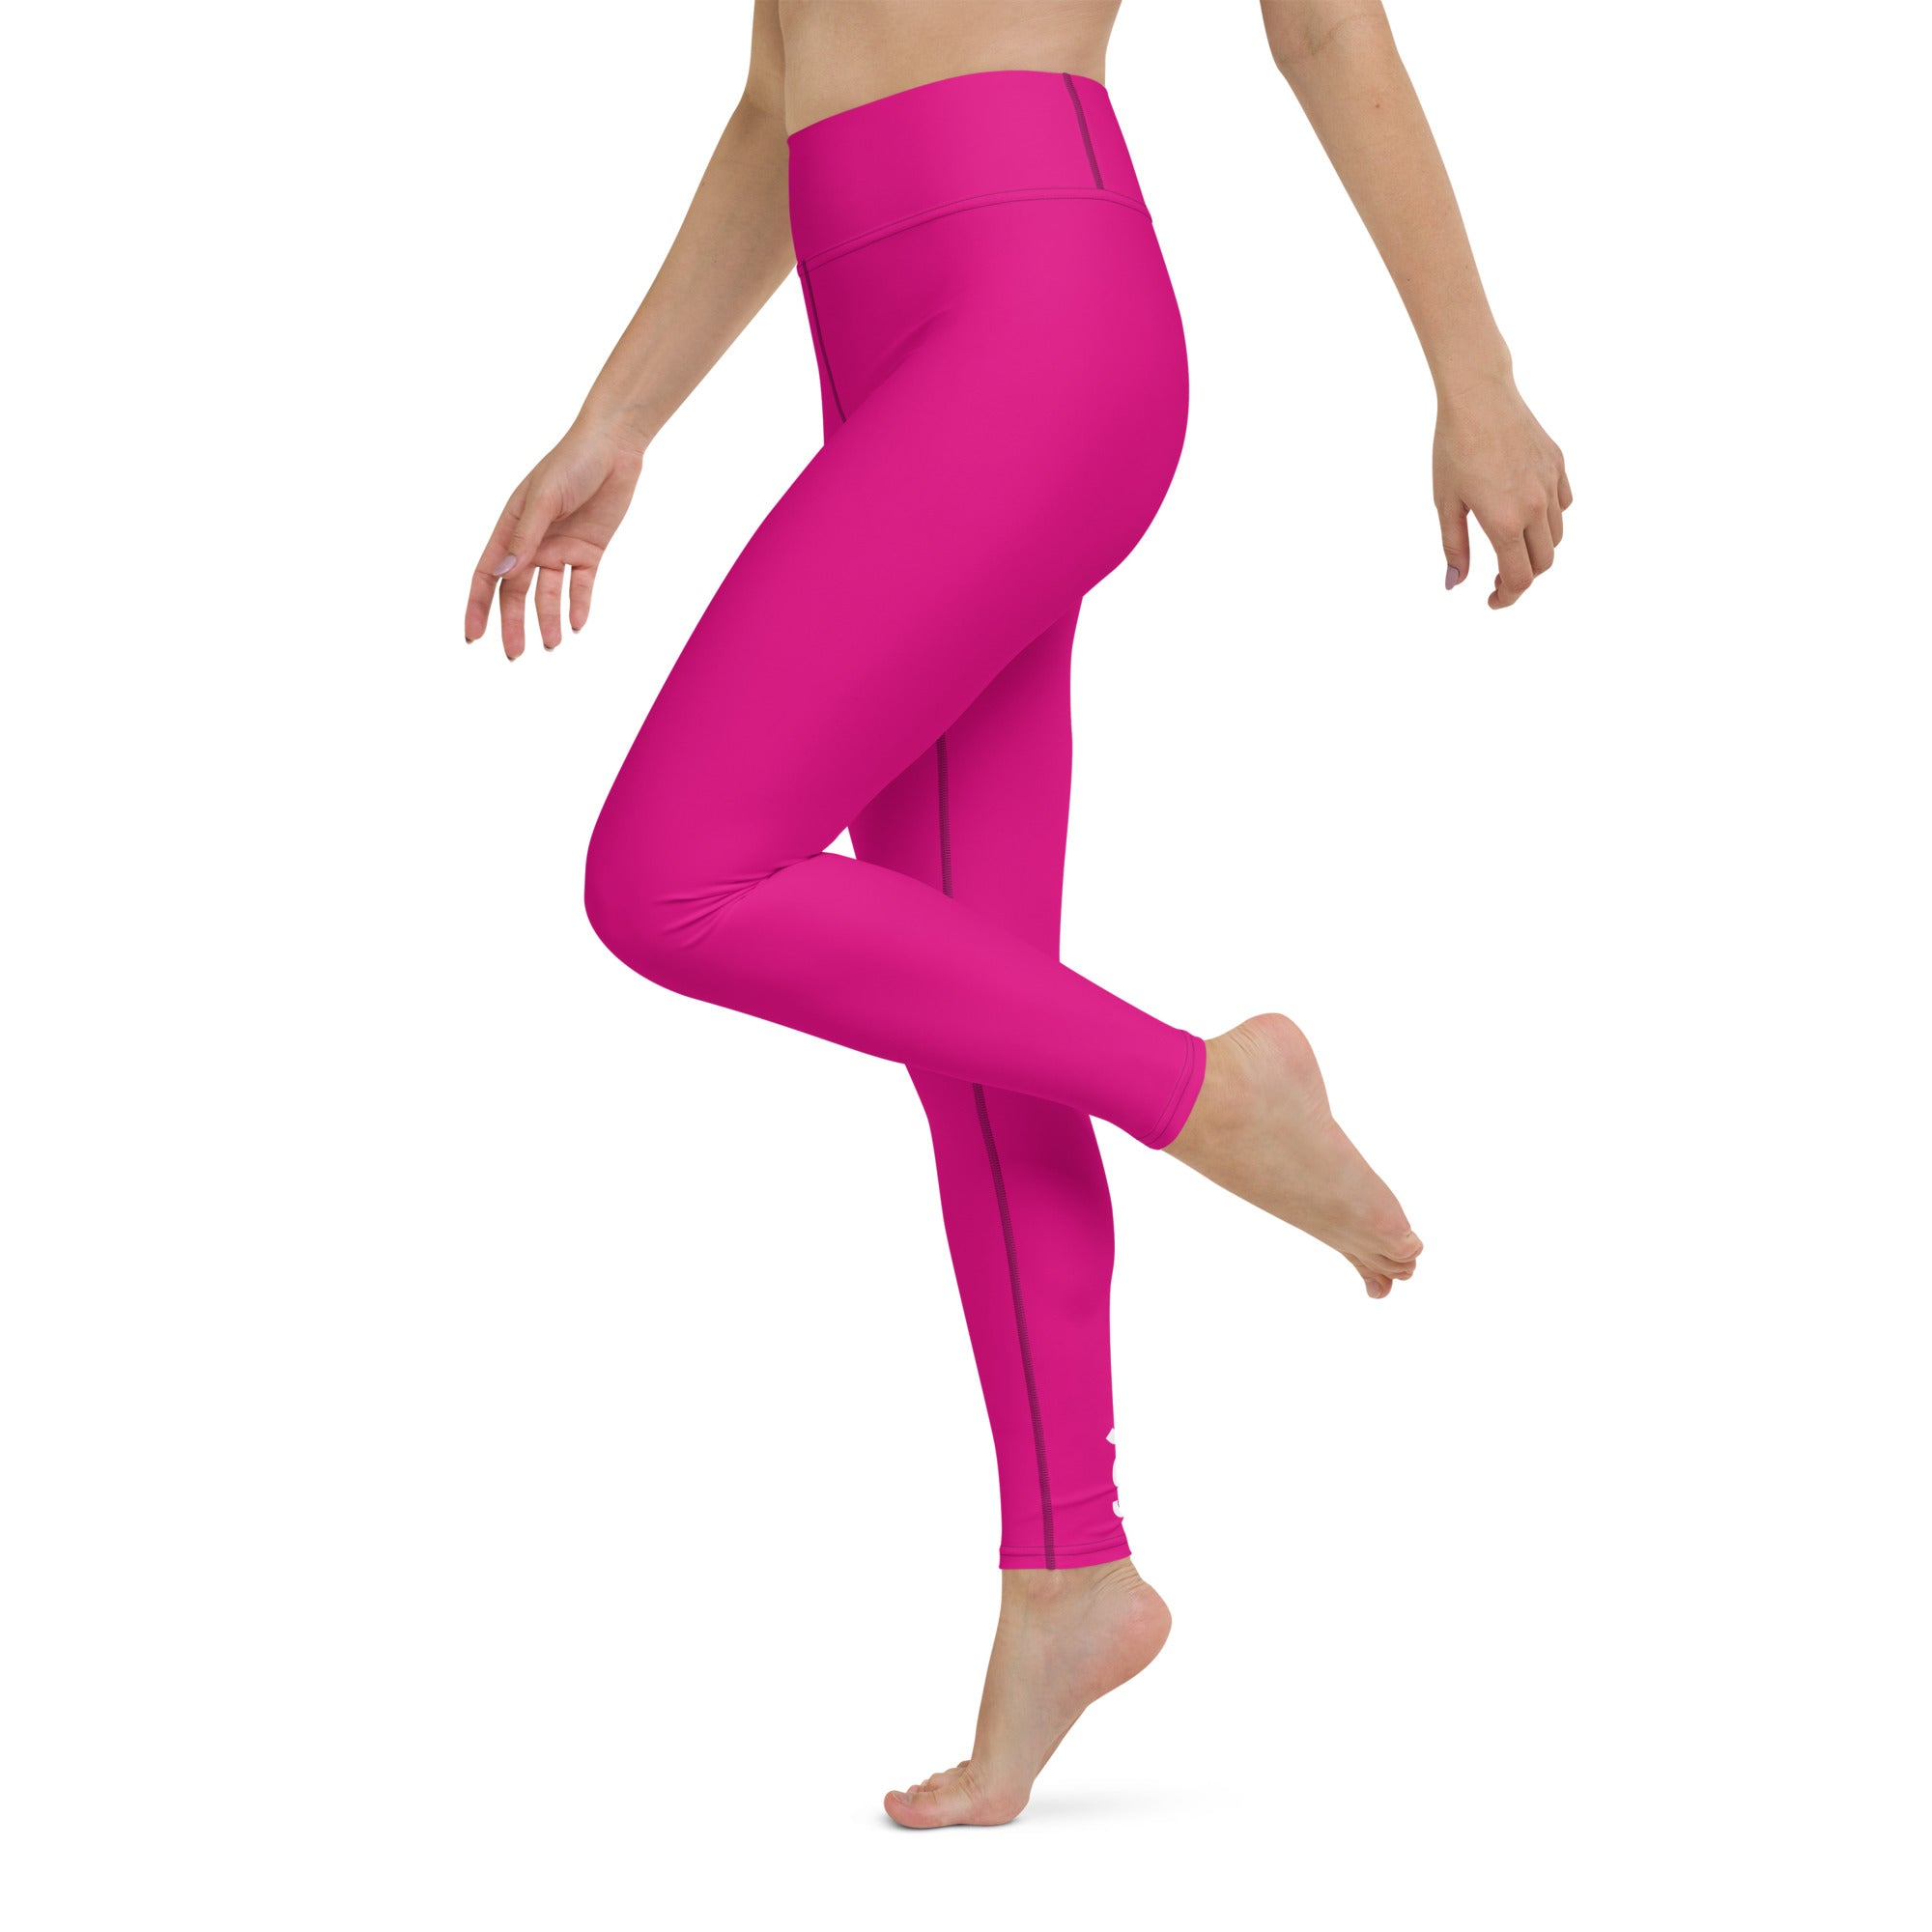 Rubber Duck Just Ducky Women's Print Fitness Stretch *Leggings* Yoga Pants  | eBay